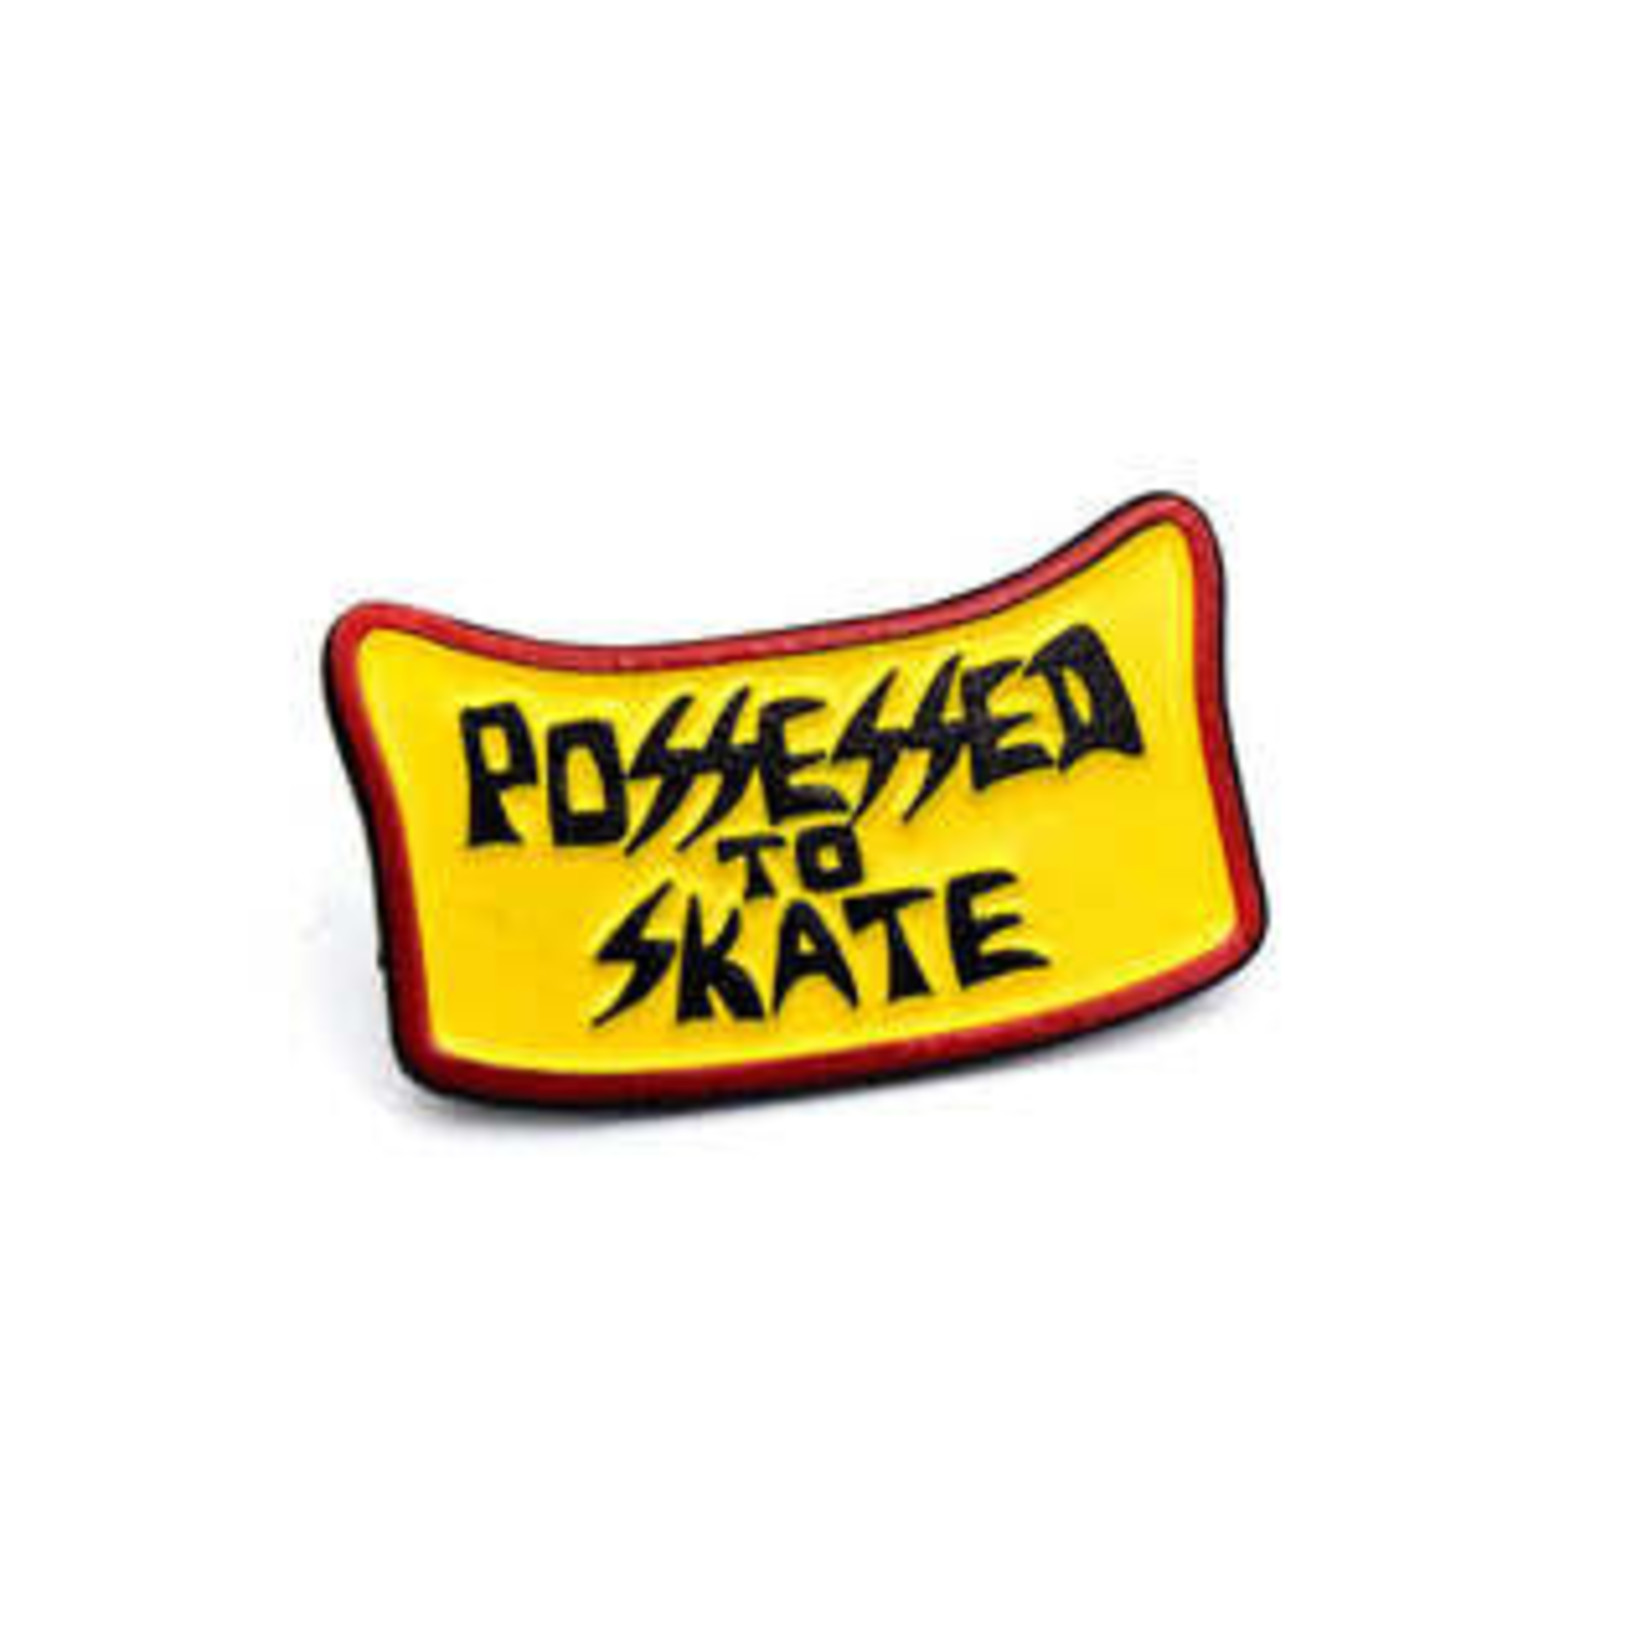 Suicidal Skates Suicidal Skates Possessed to Skate Enamel Pin - 1.25"